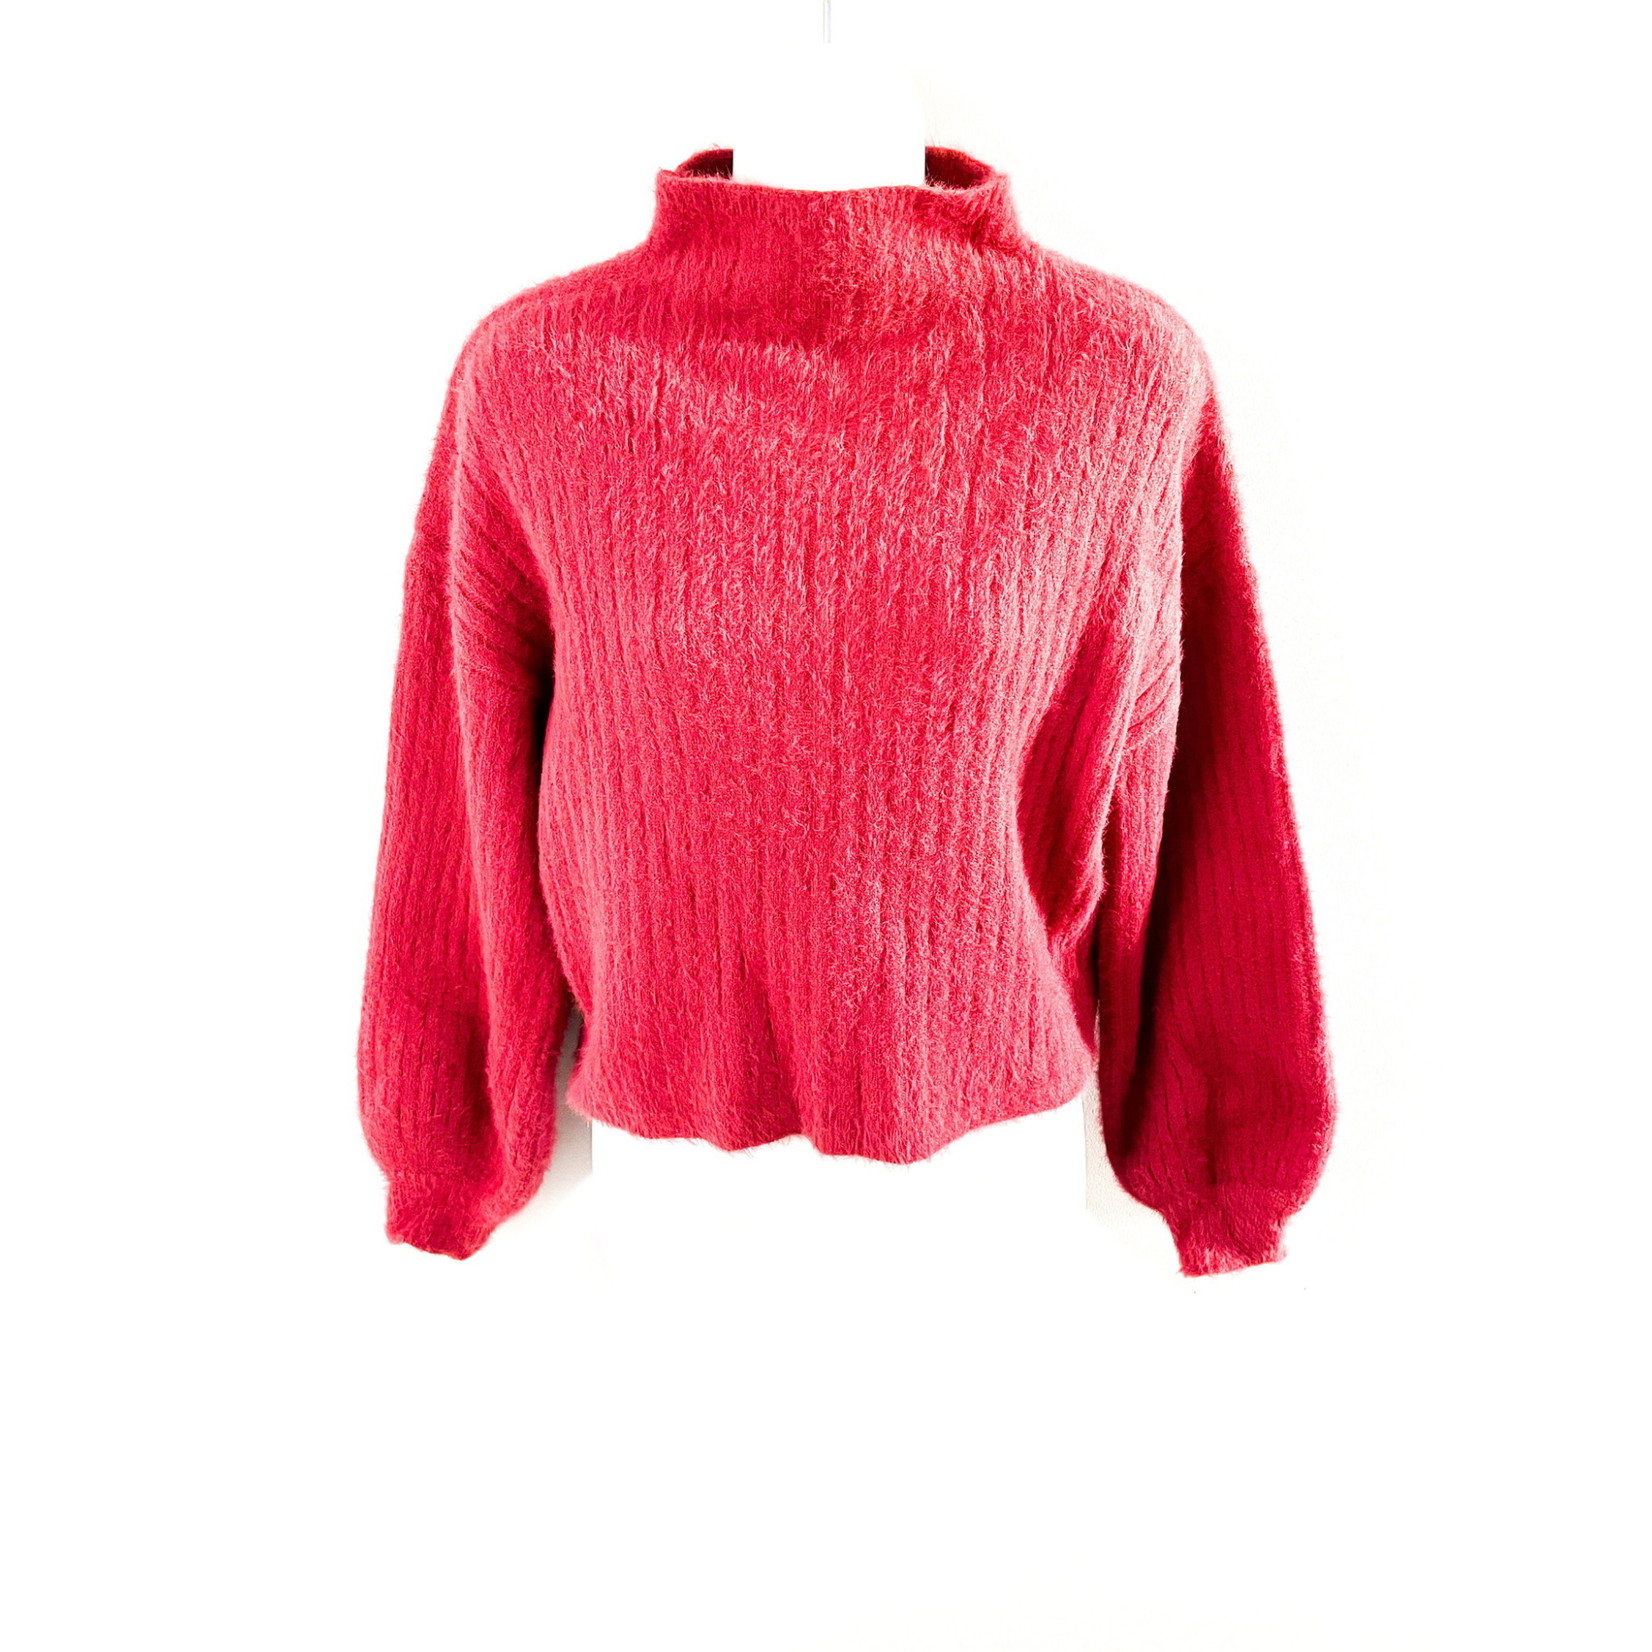 Prima Prima Fuzzy Ballon Sleeve Sweater - Size M